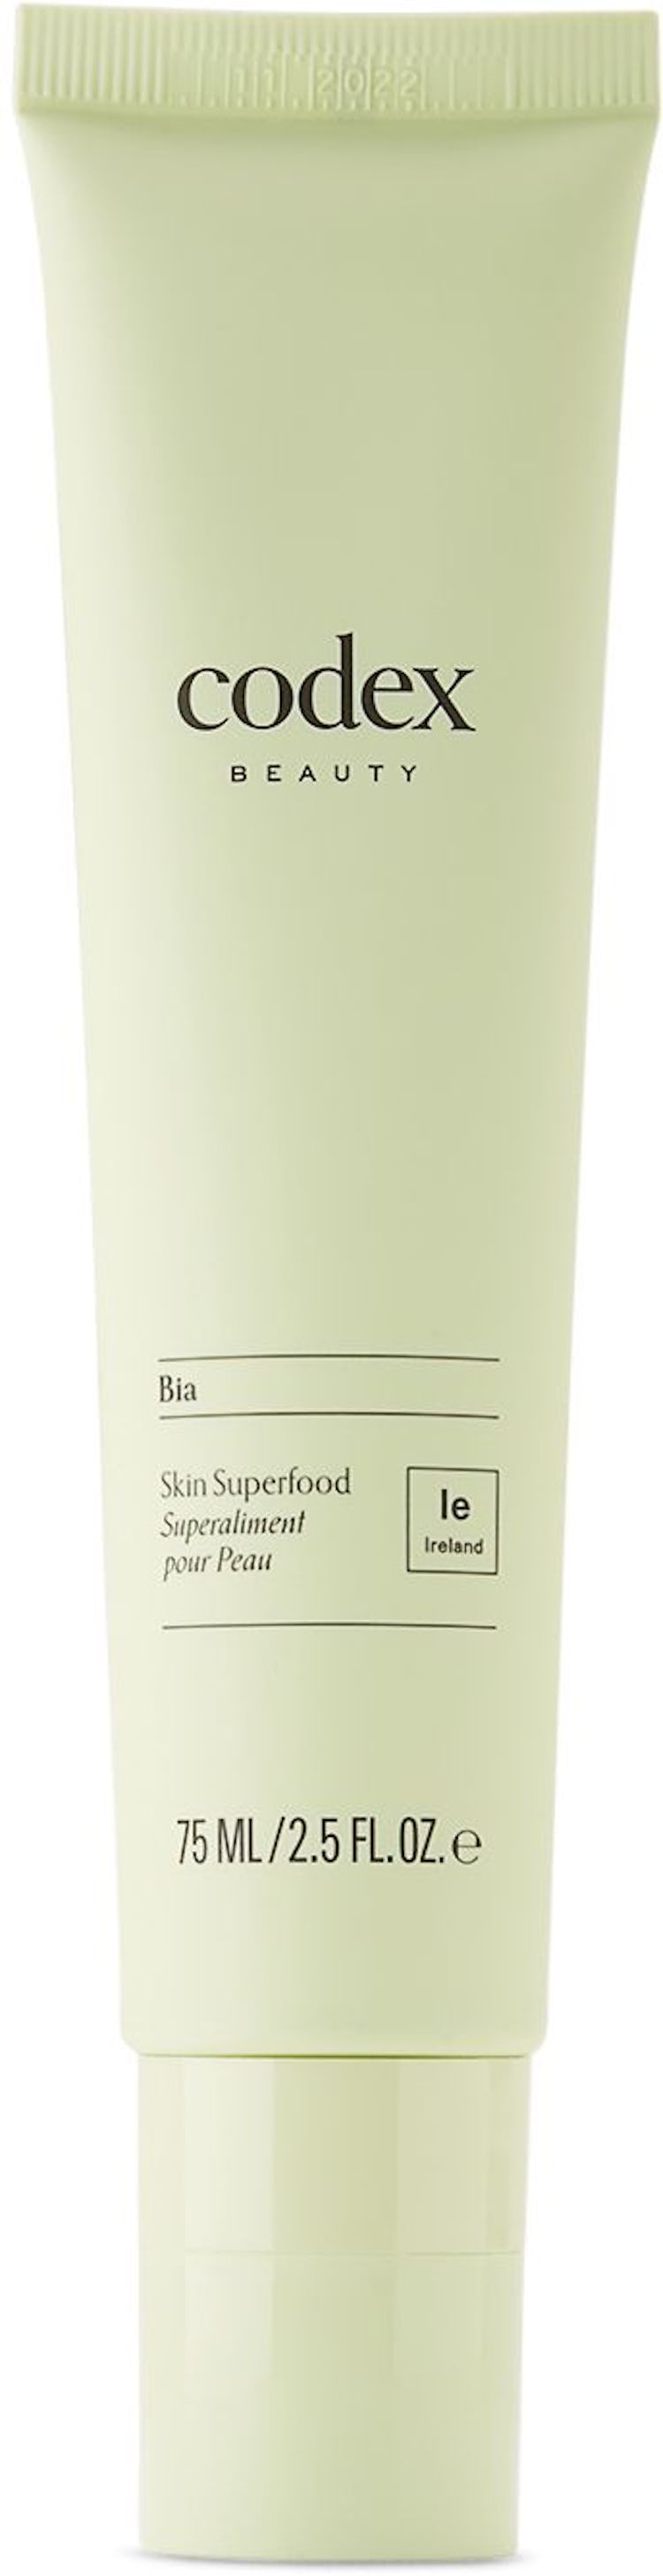 Bia Skin Superfood, 75 mL: additional image